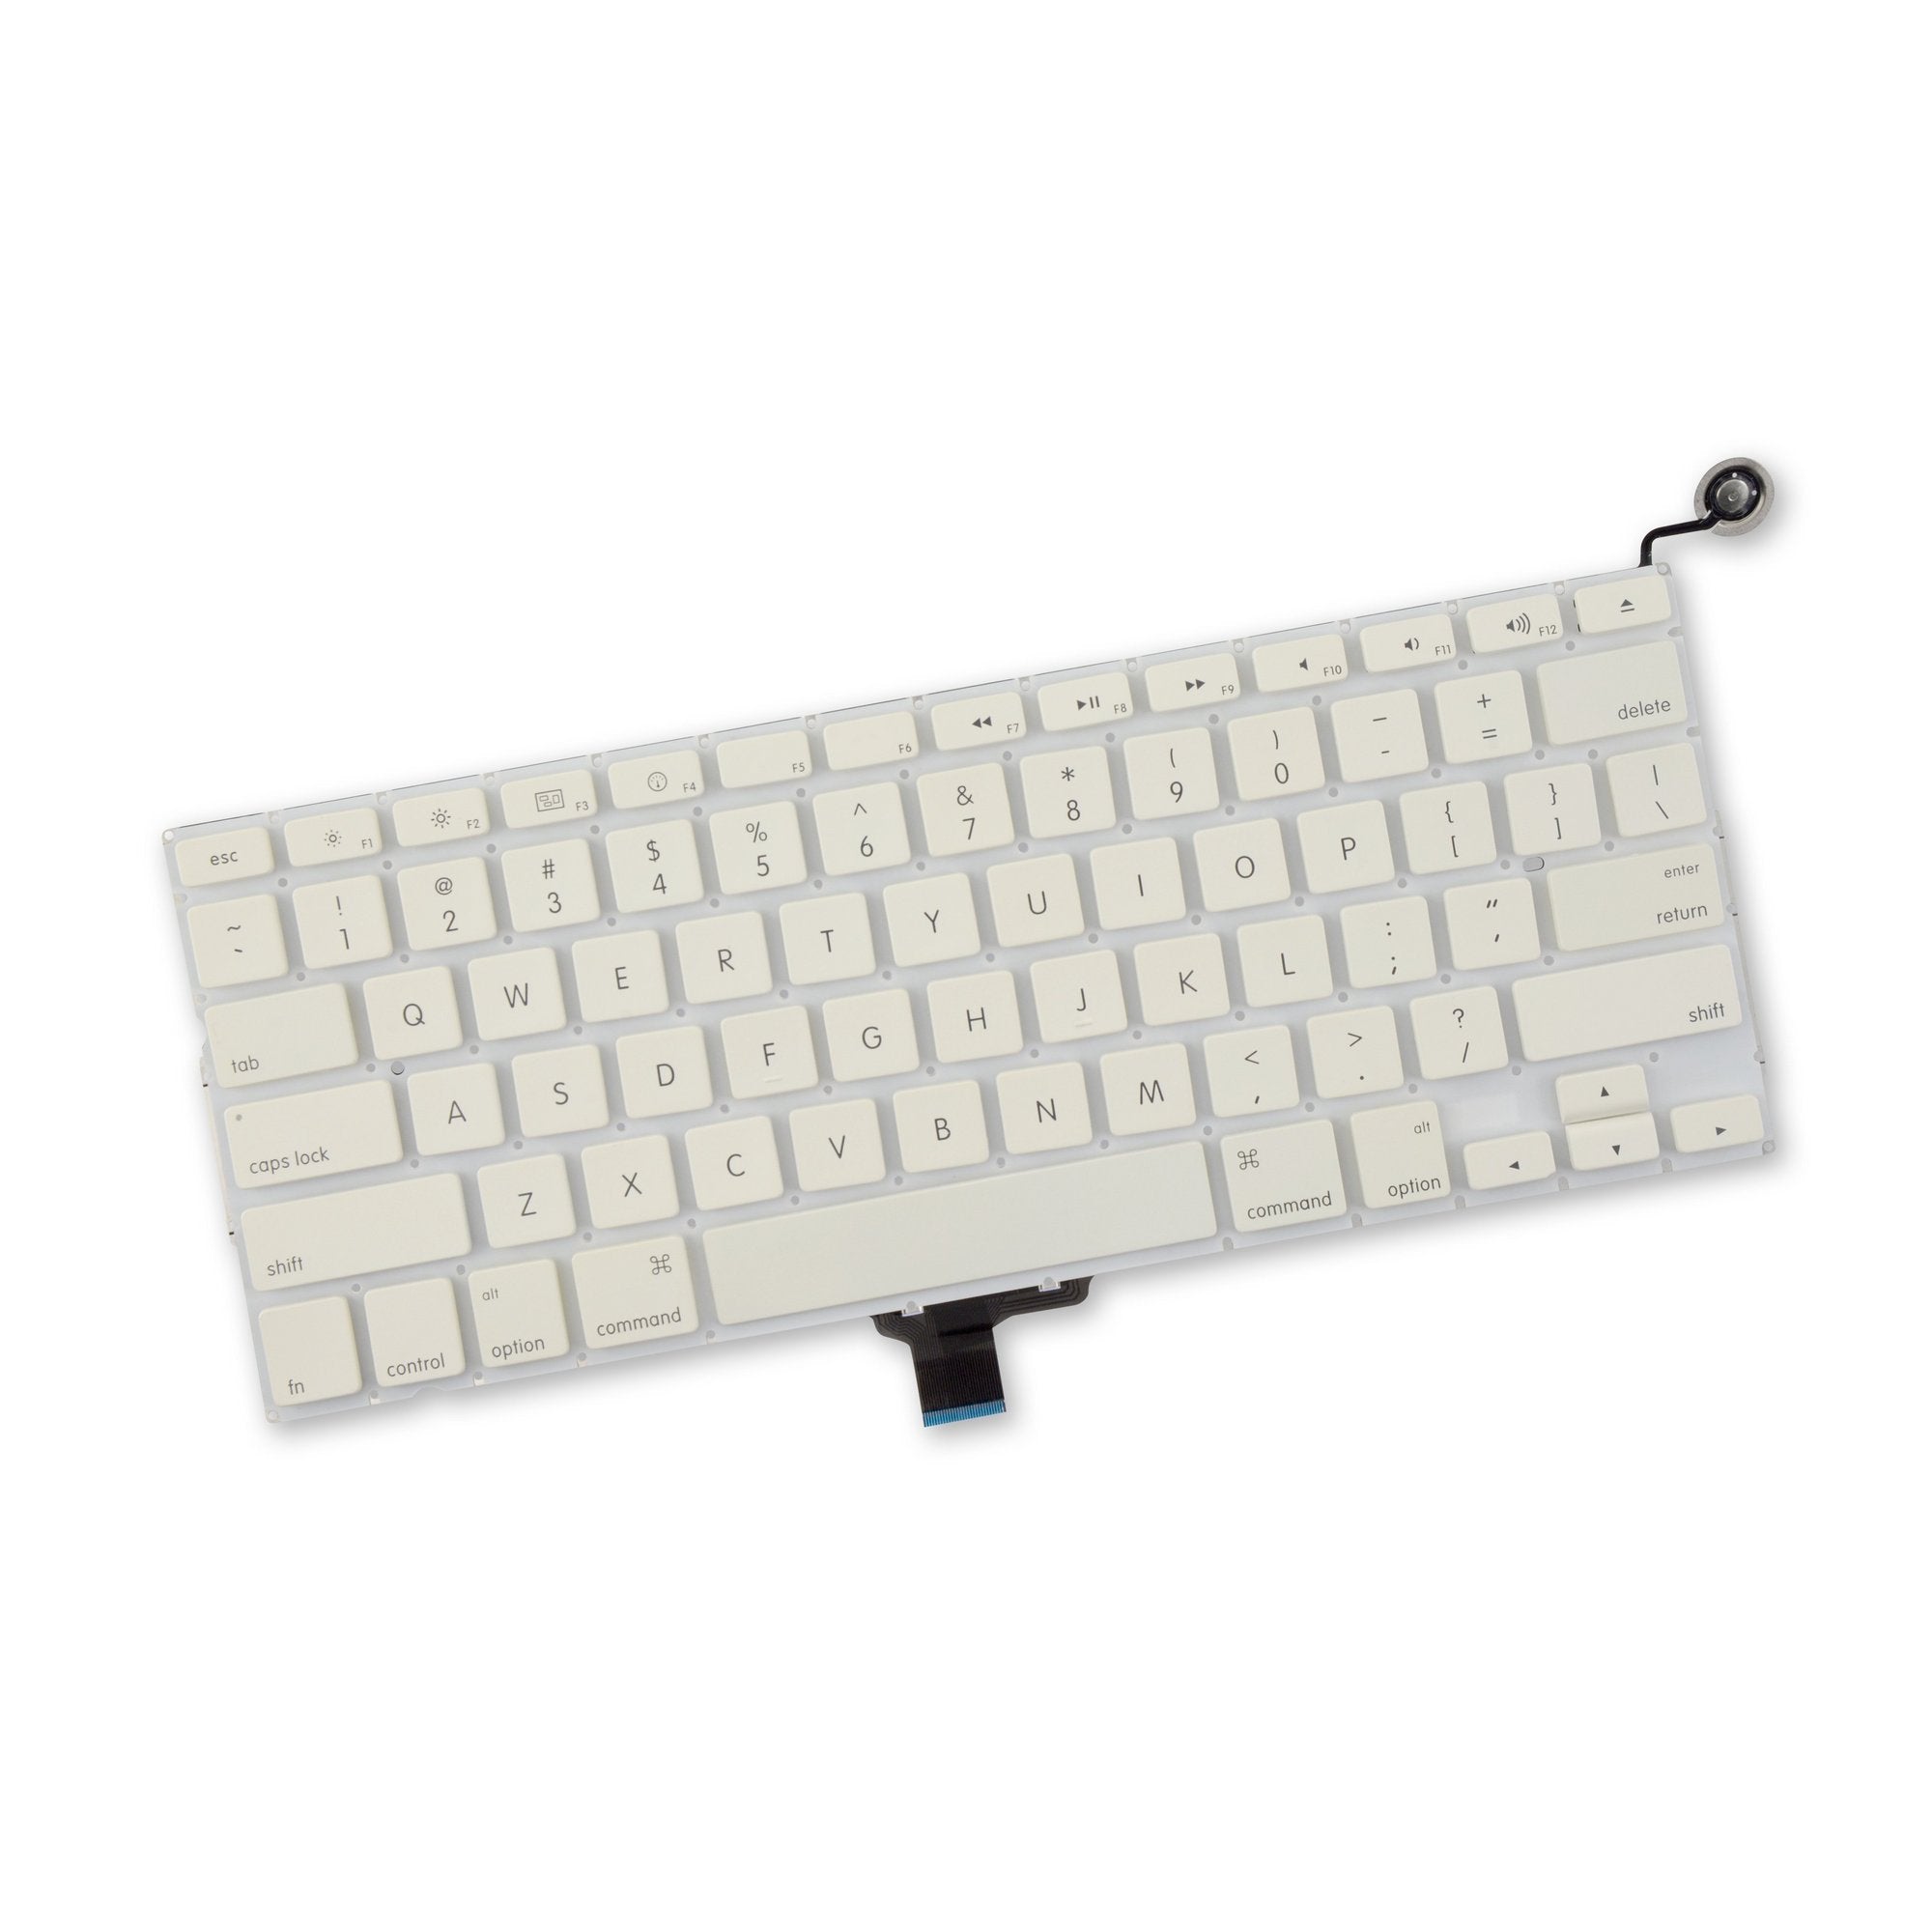 MacBook Unibody (Model A1342) Keyboard